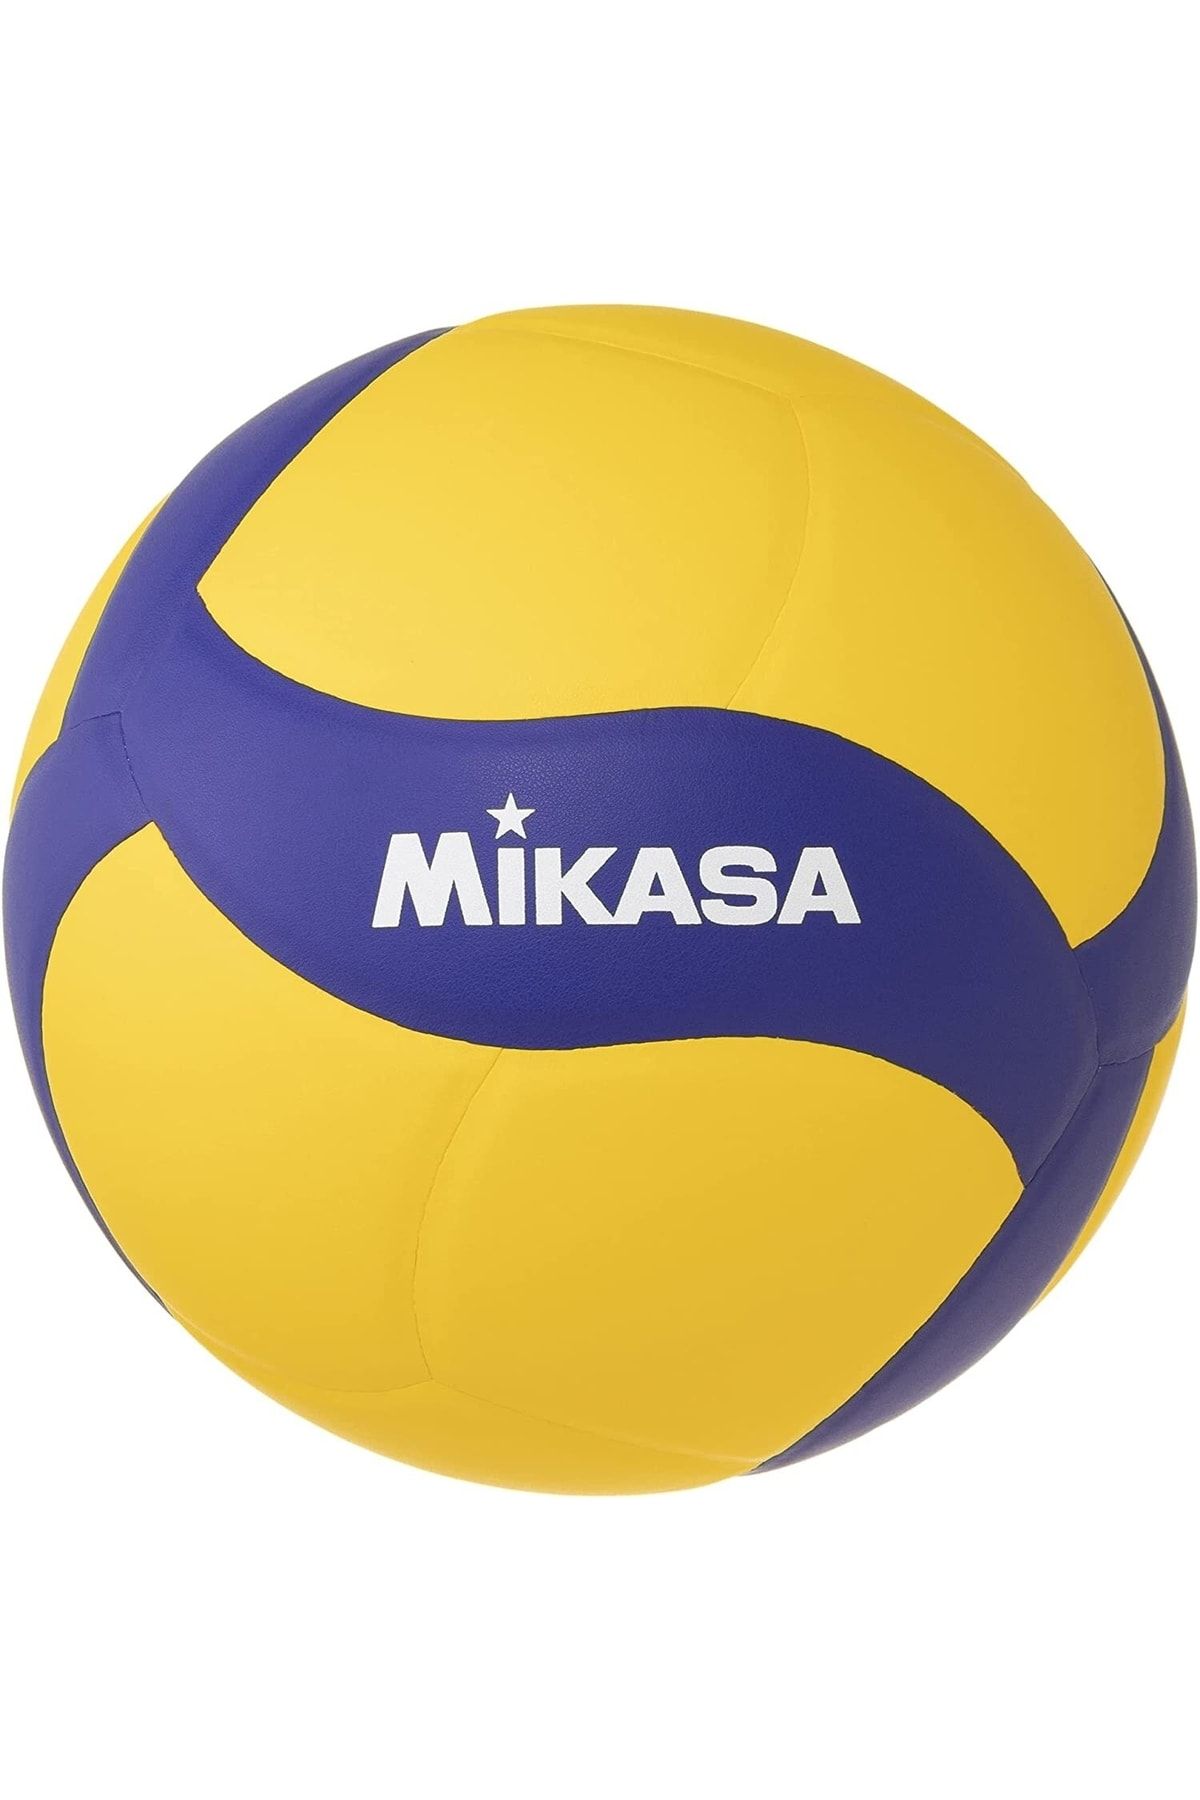 MIKASA V330w 5 No Yapıştırma Voleybol Topu